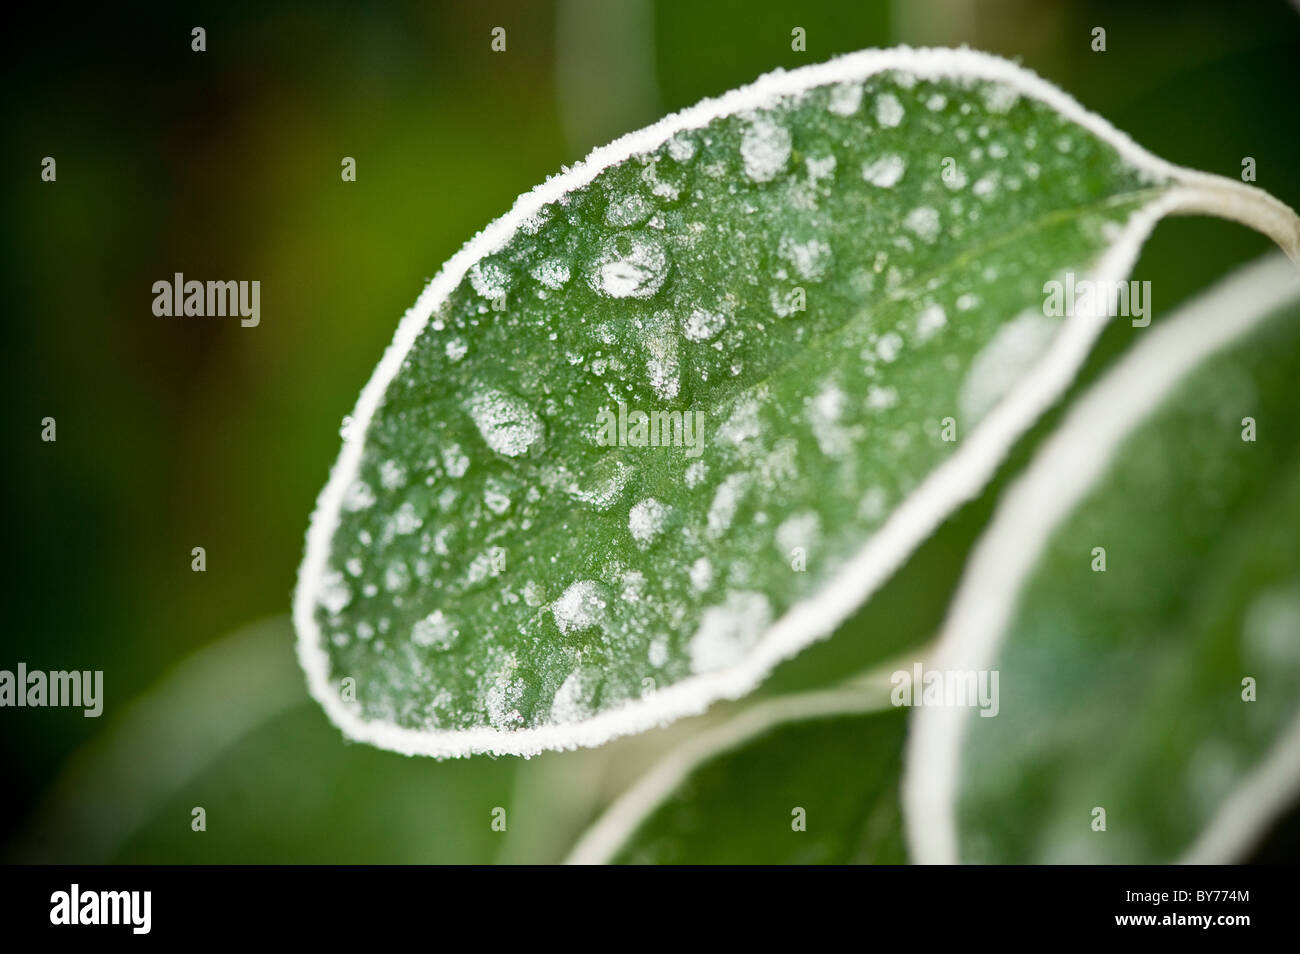 Frozen water droplets on Brachyglottis leaf after a heavy frost. Stock Photo